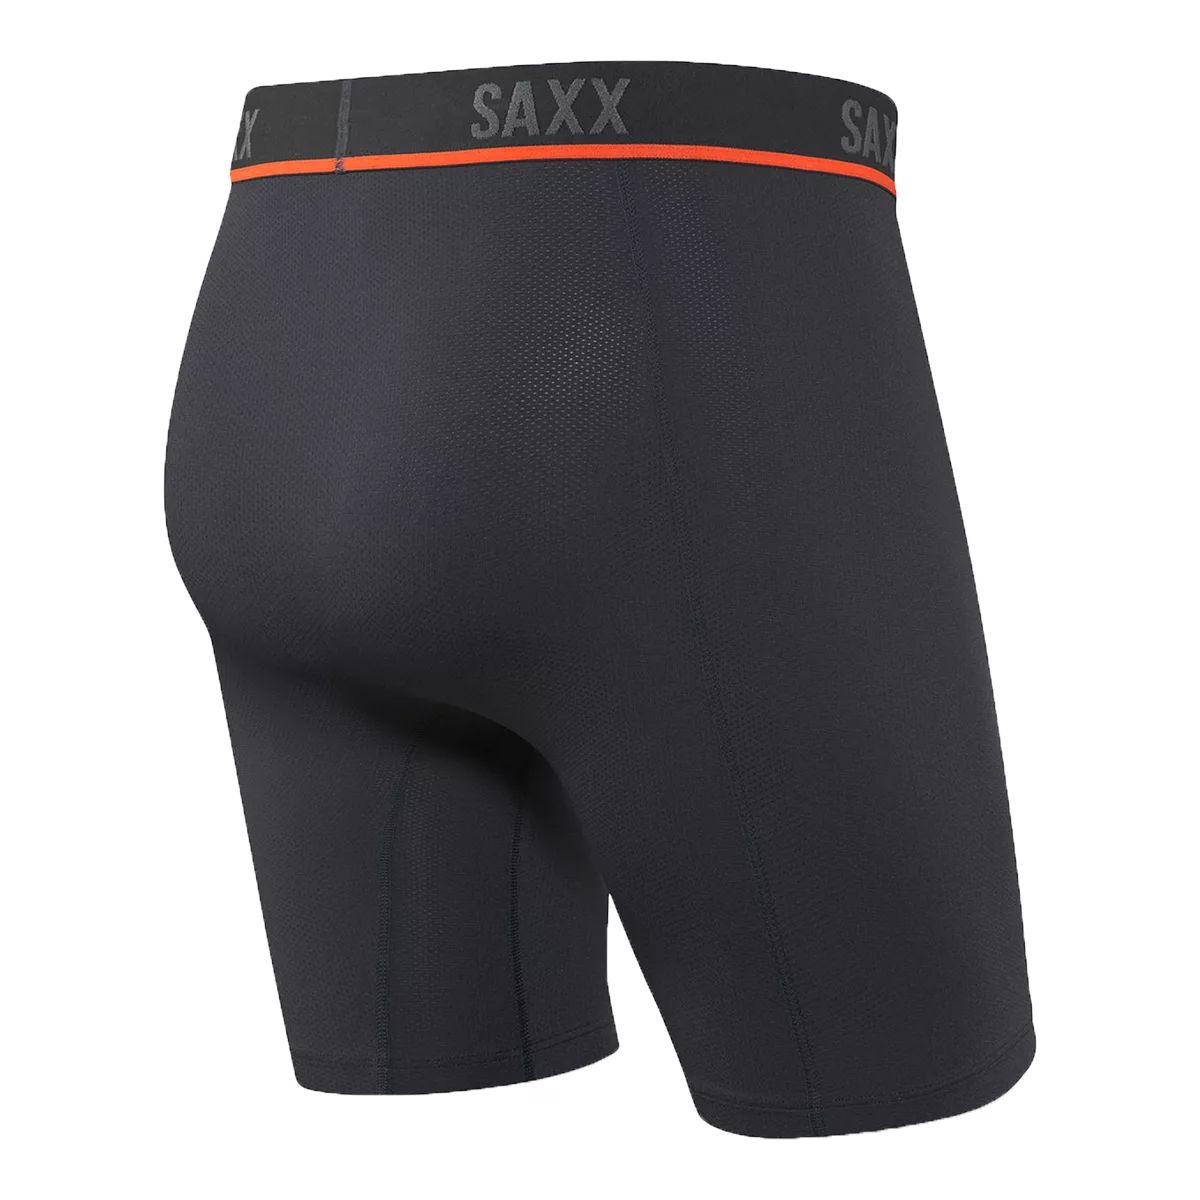 SAXX Sport Mesh 3 Pack Stretch Boxer Briefs - Men's Boxers in Black  Graphite Lighting B